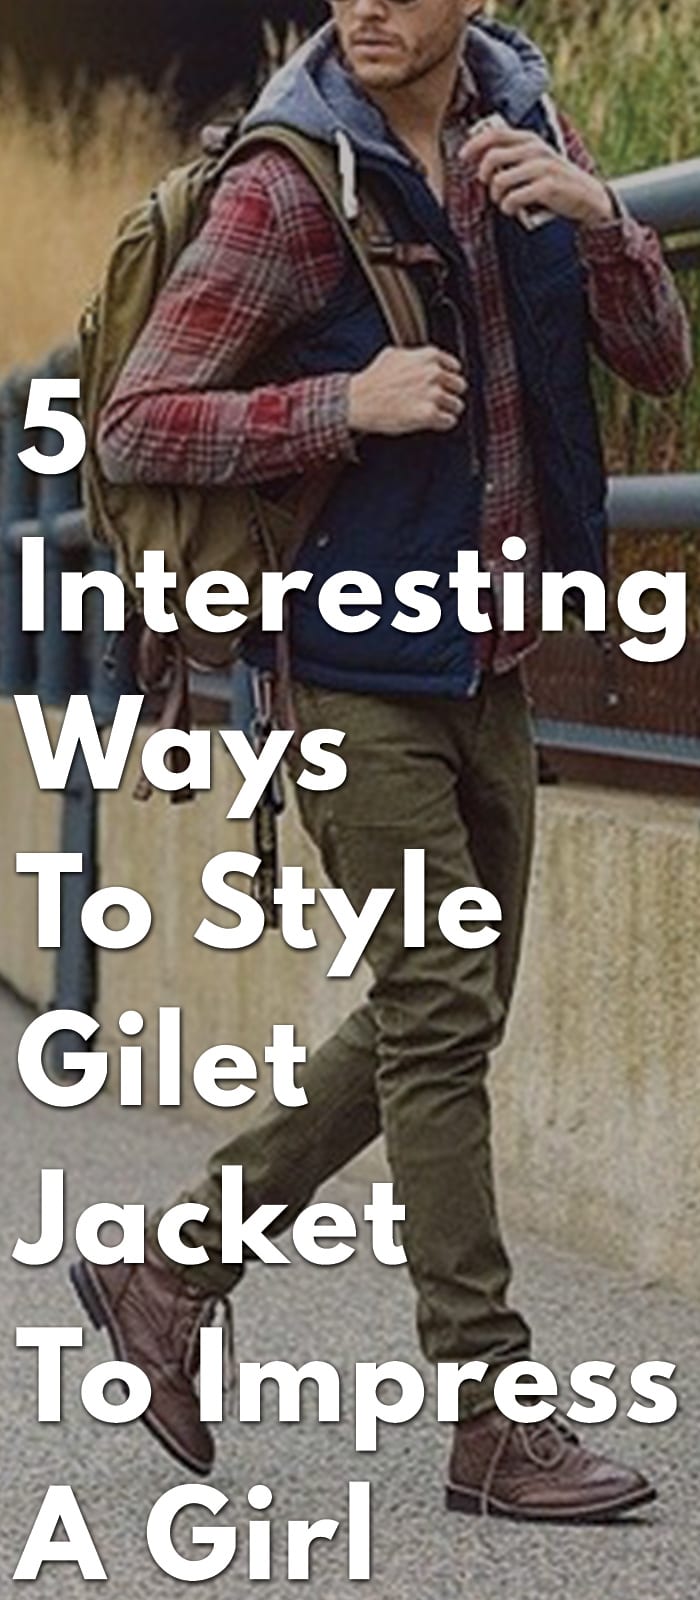 5-Interesting-Ways-To-Style-Gilet-Jacket-To-Impress-A-Girl